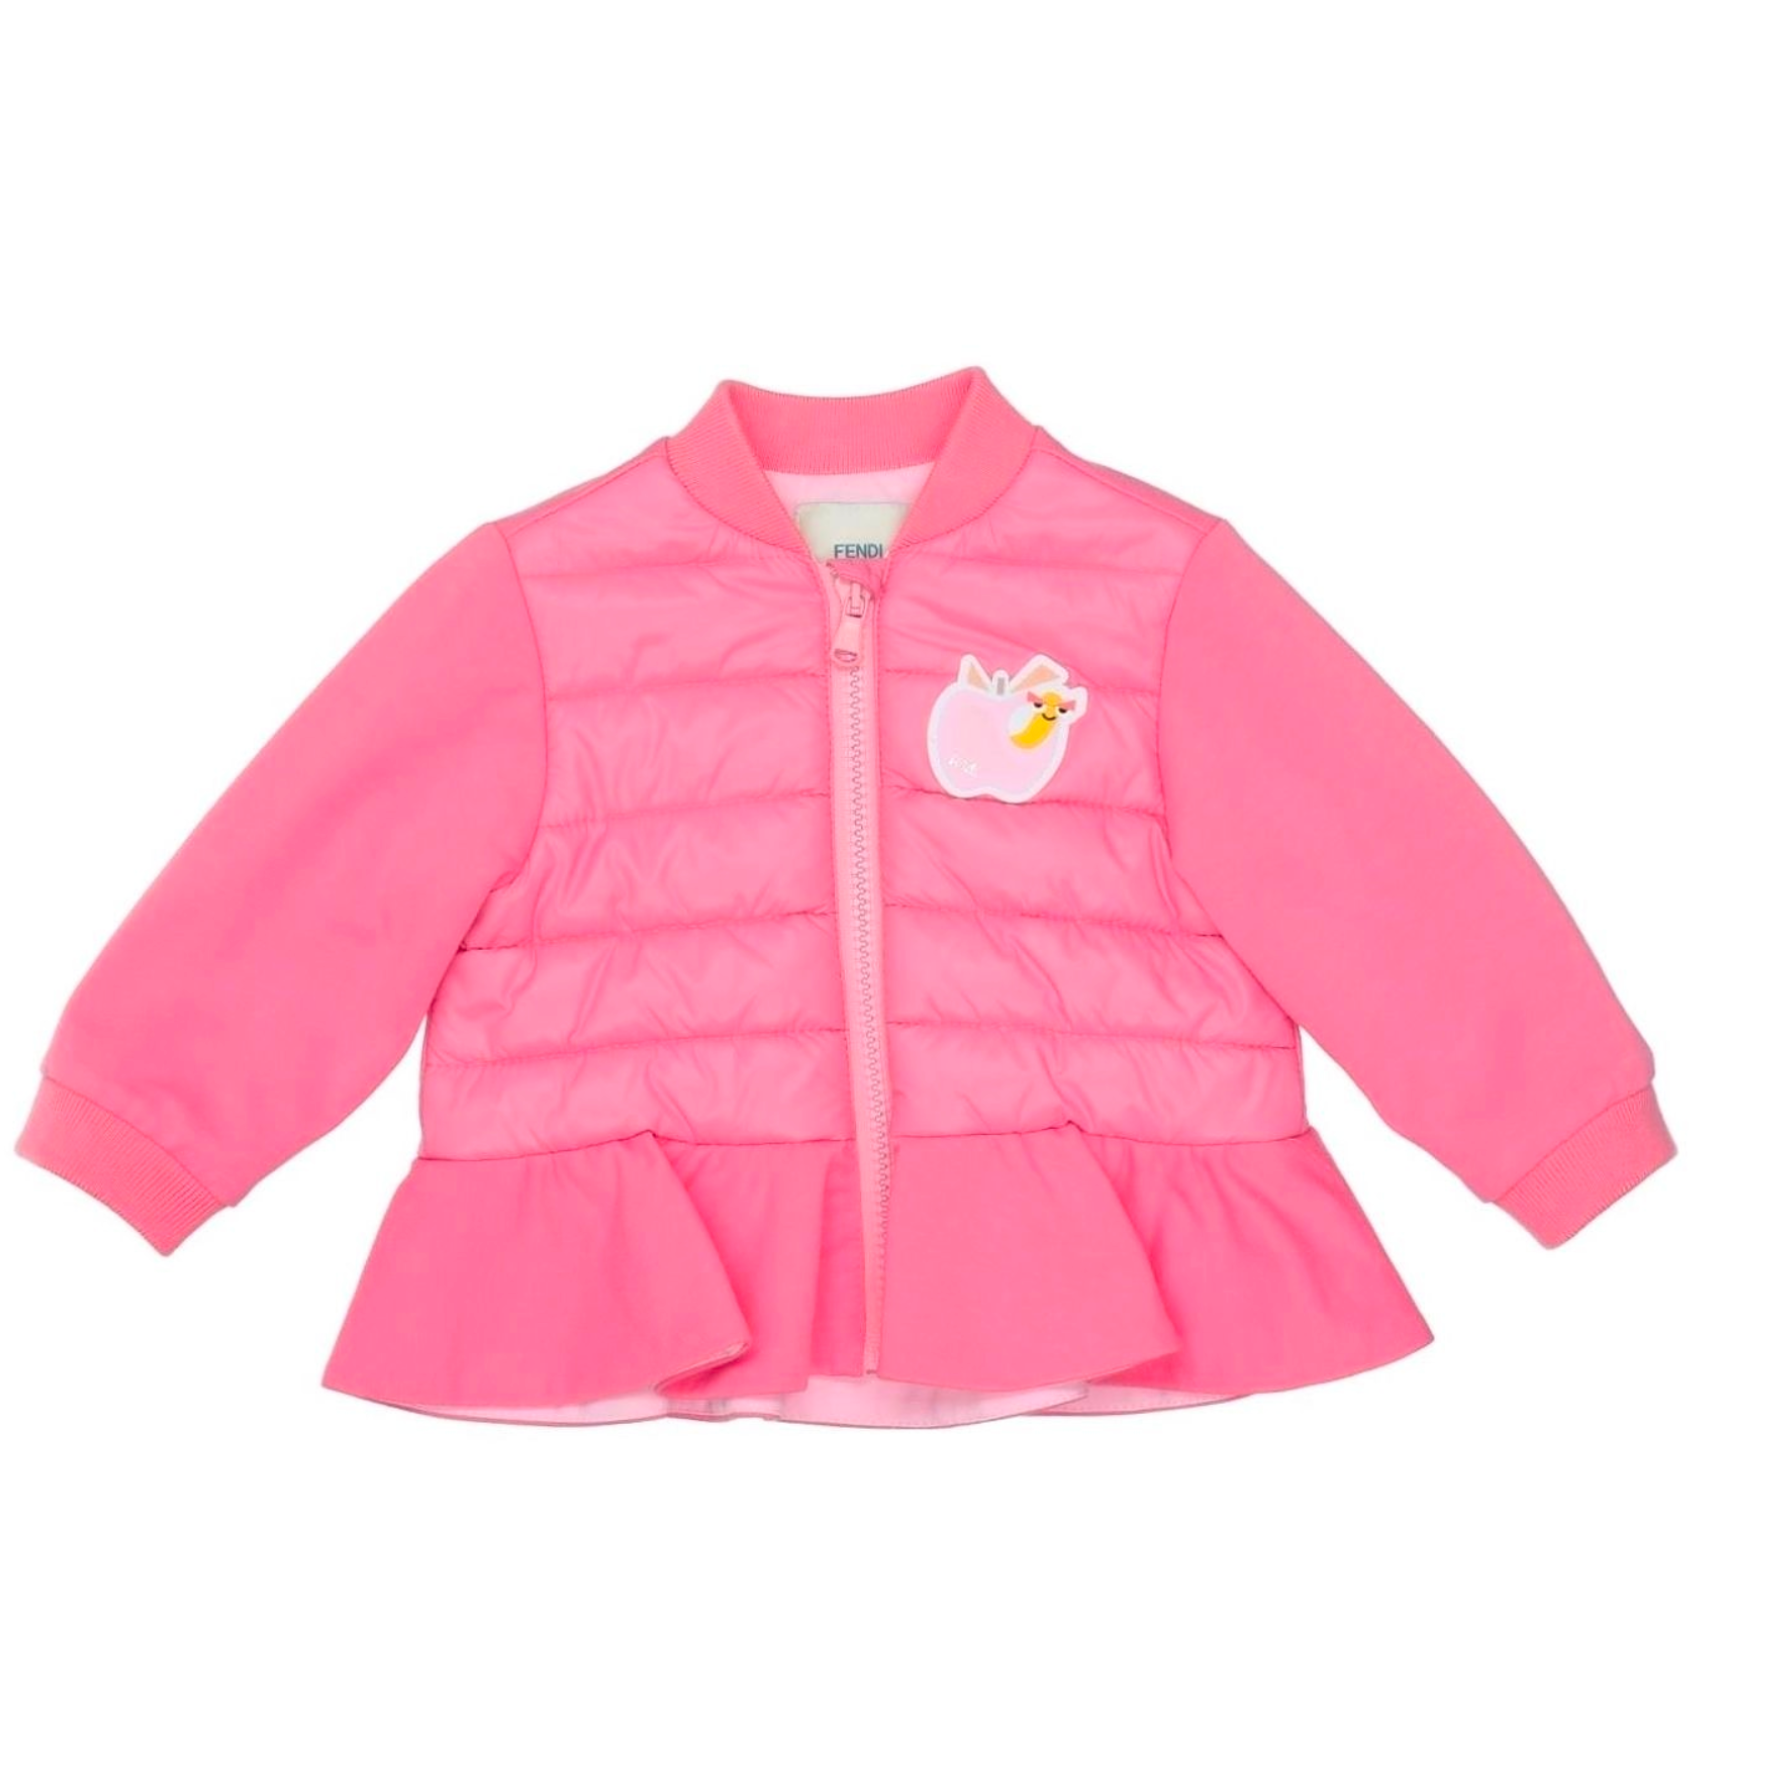 FENDI - Pink jacket - 3 months